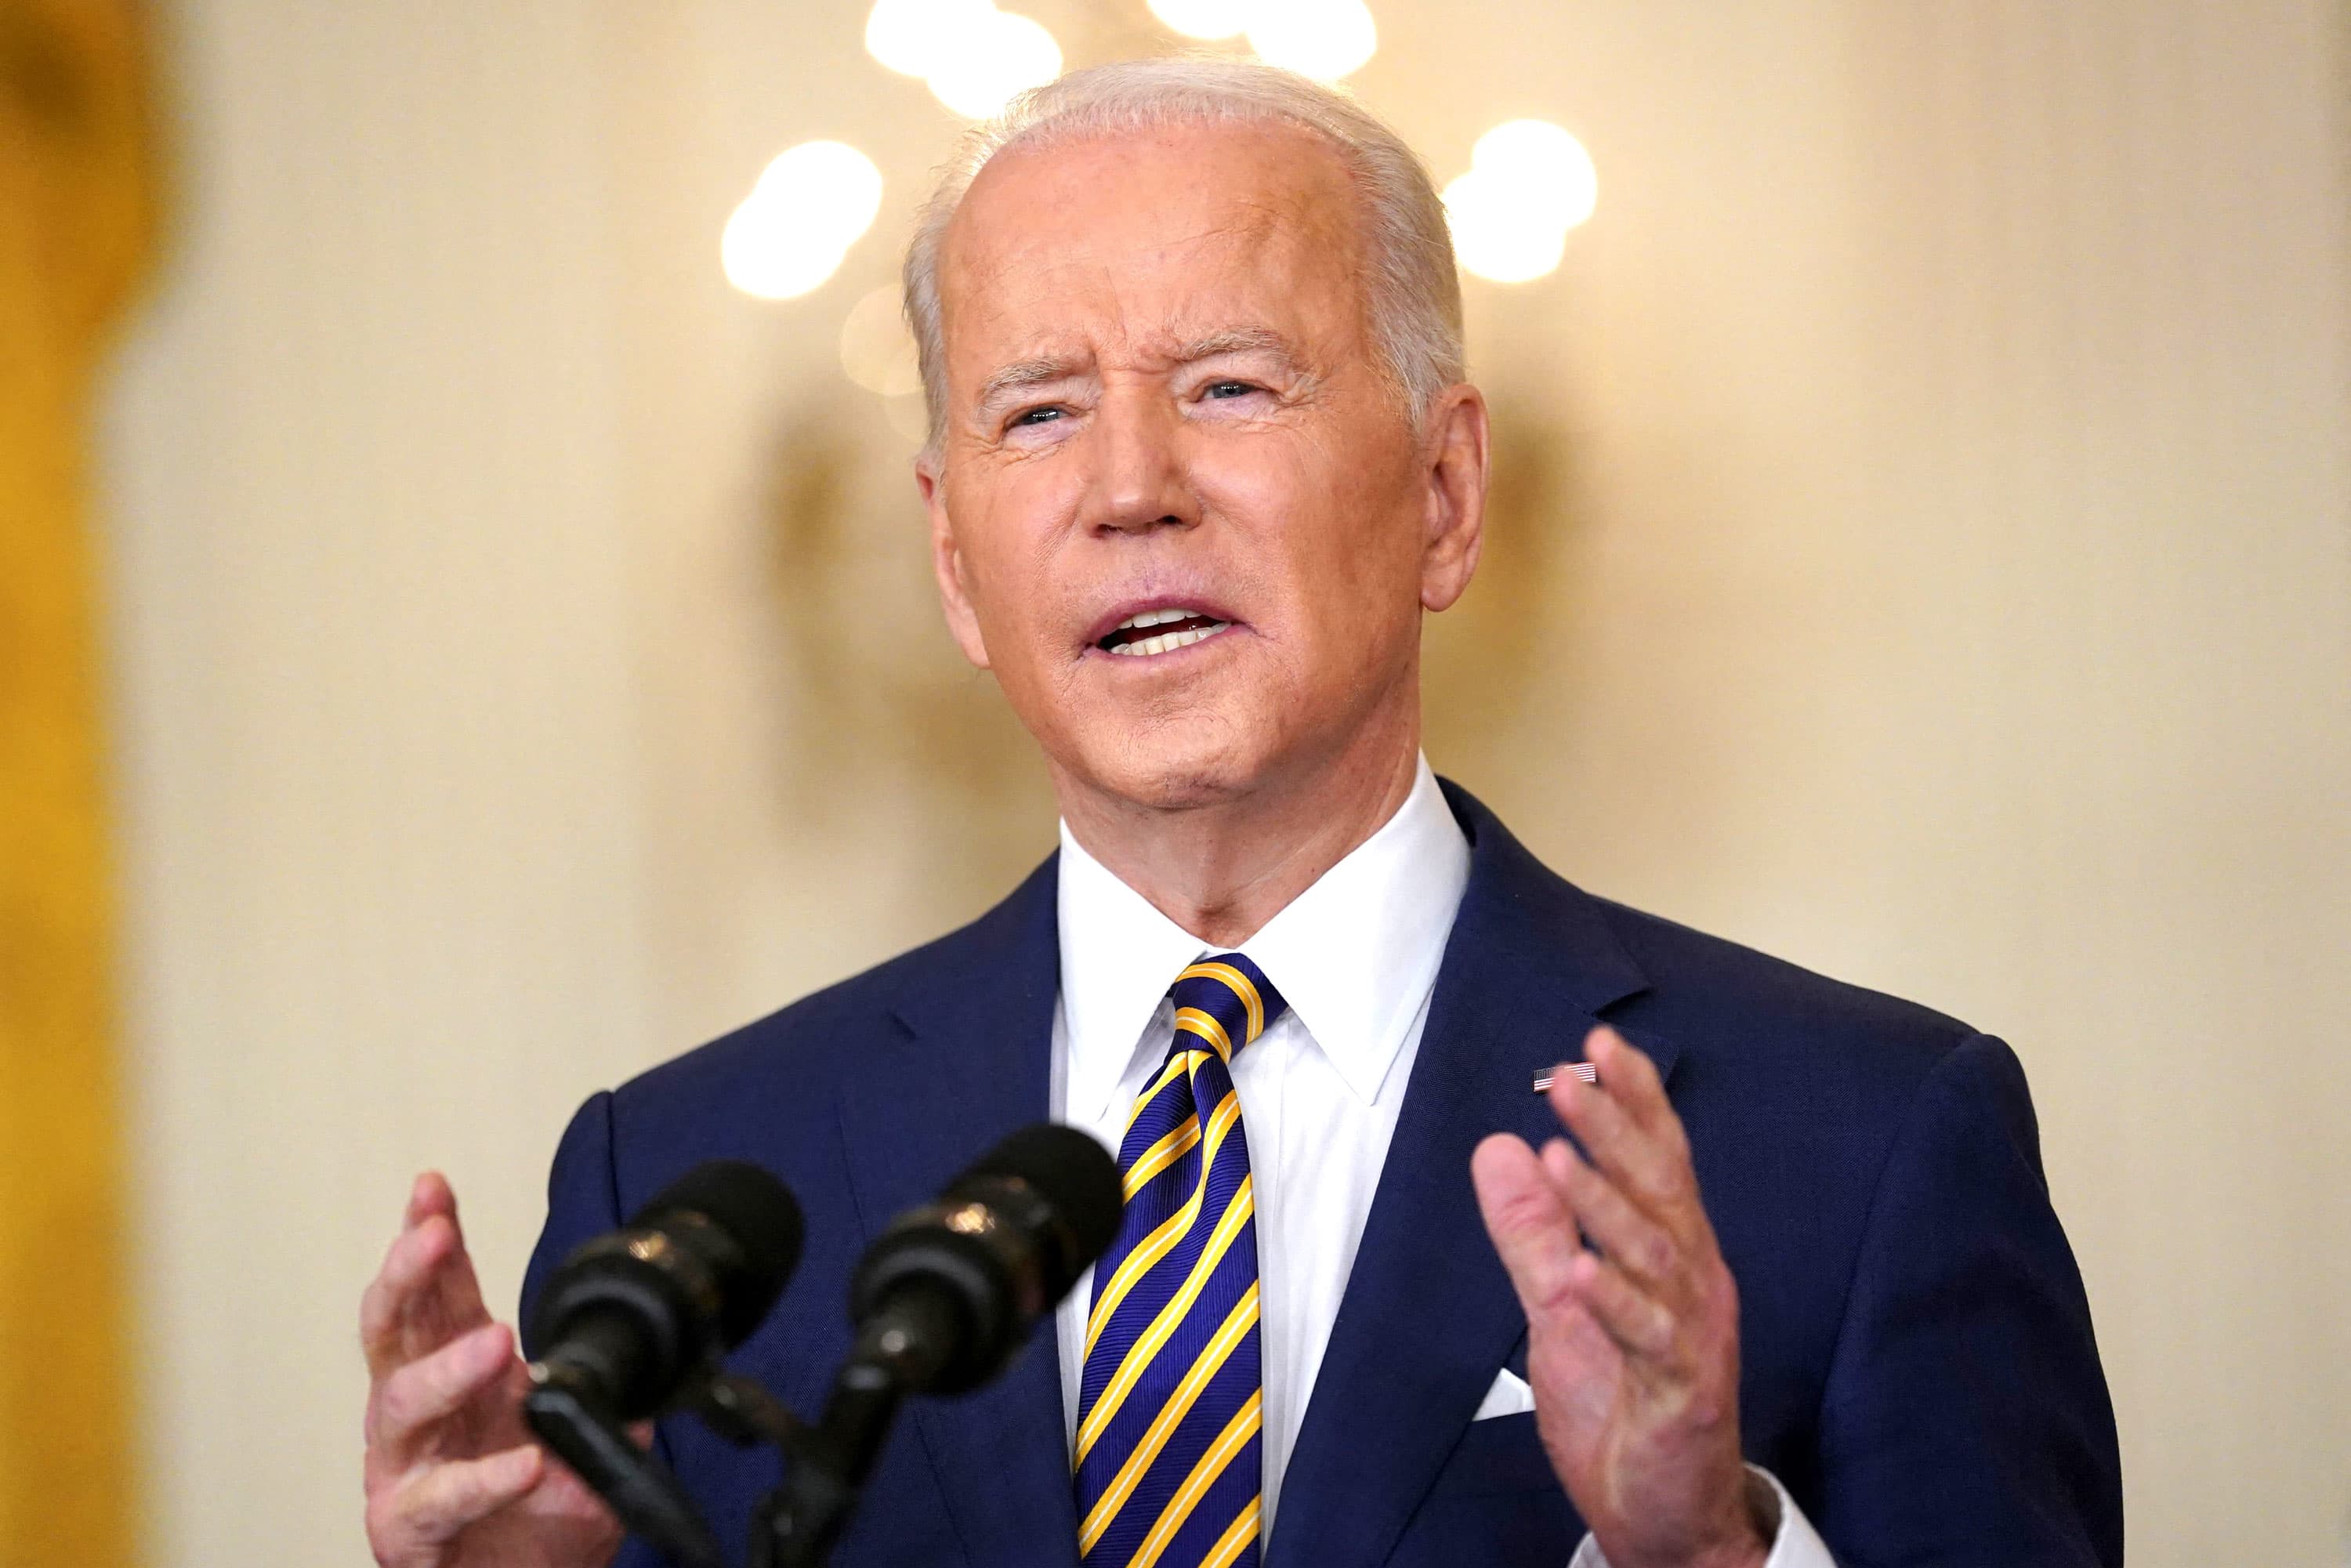 Biden says he thinks Congress can pass parts of broken-up Build Back Better plan